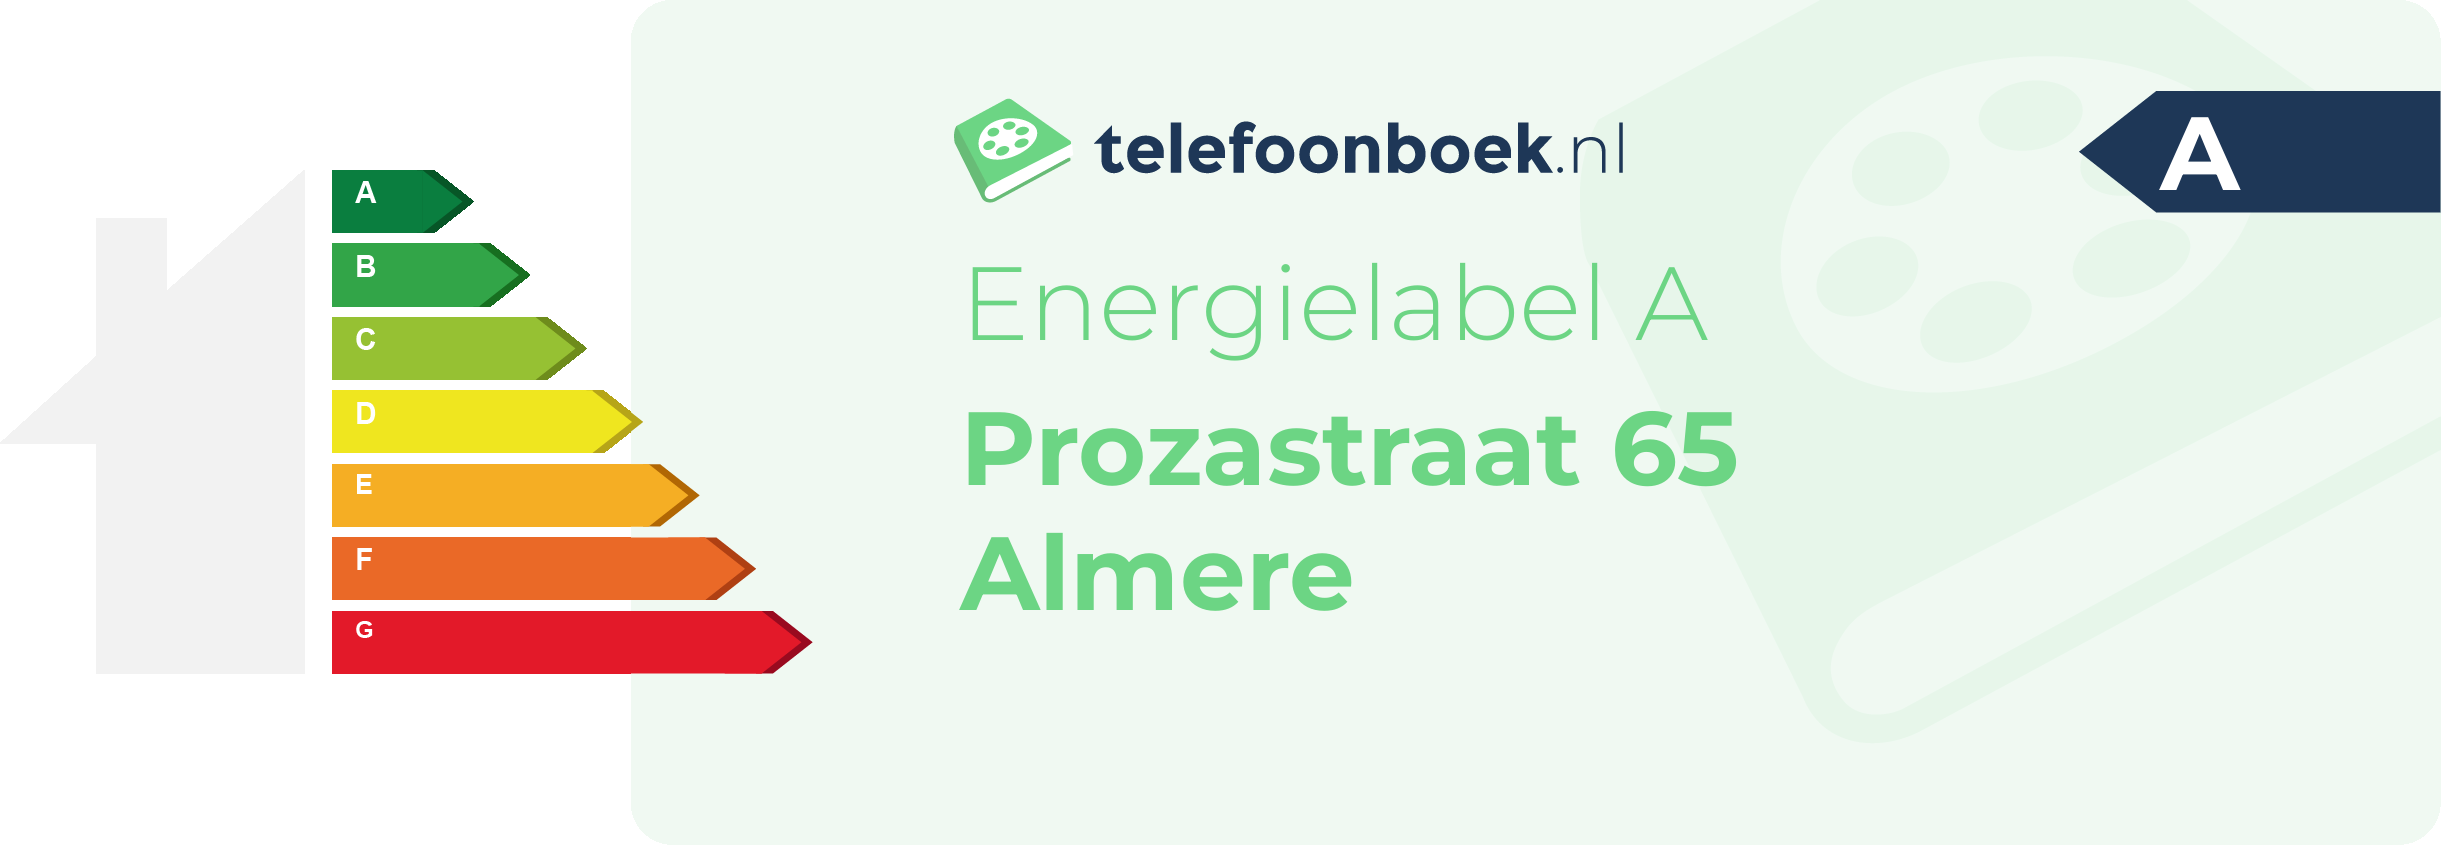 Energielabel Prozastraat 65 Almere